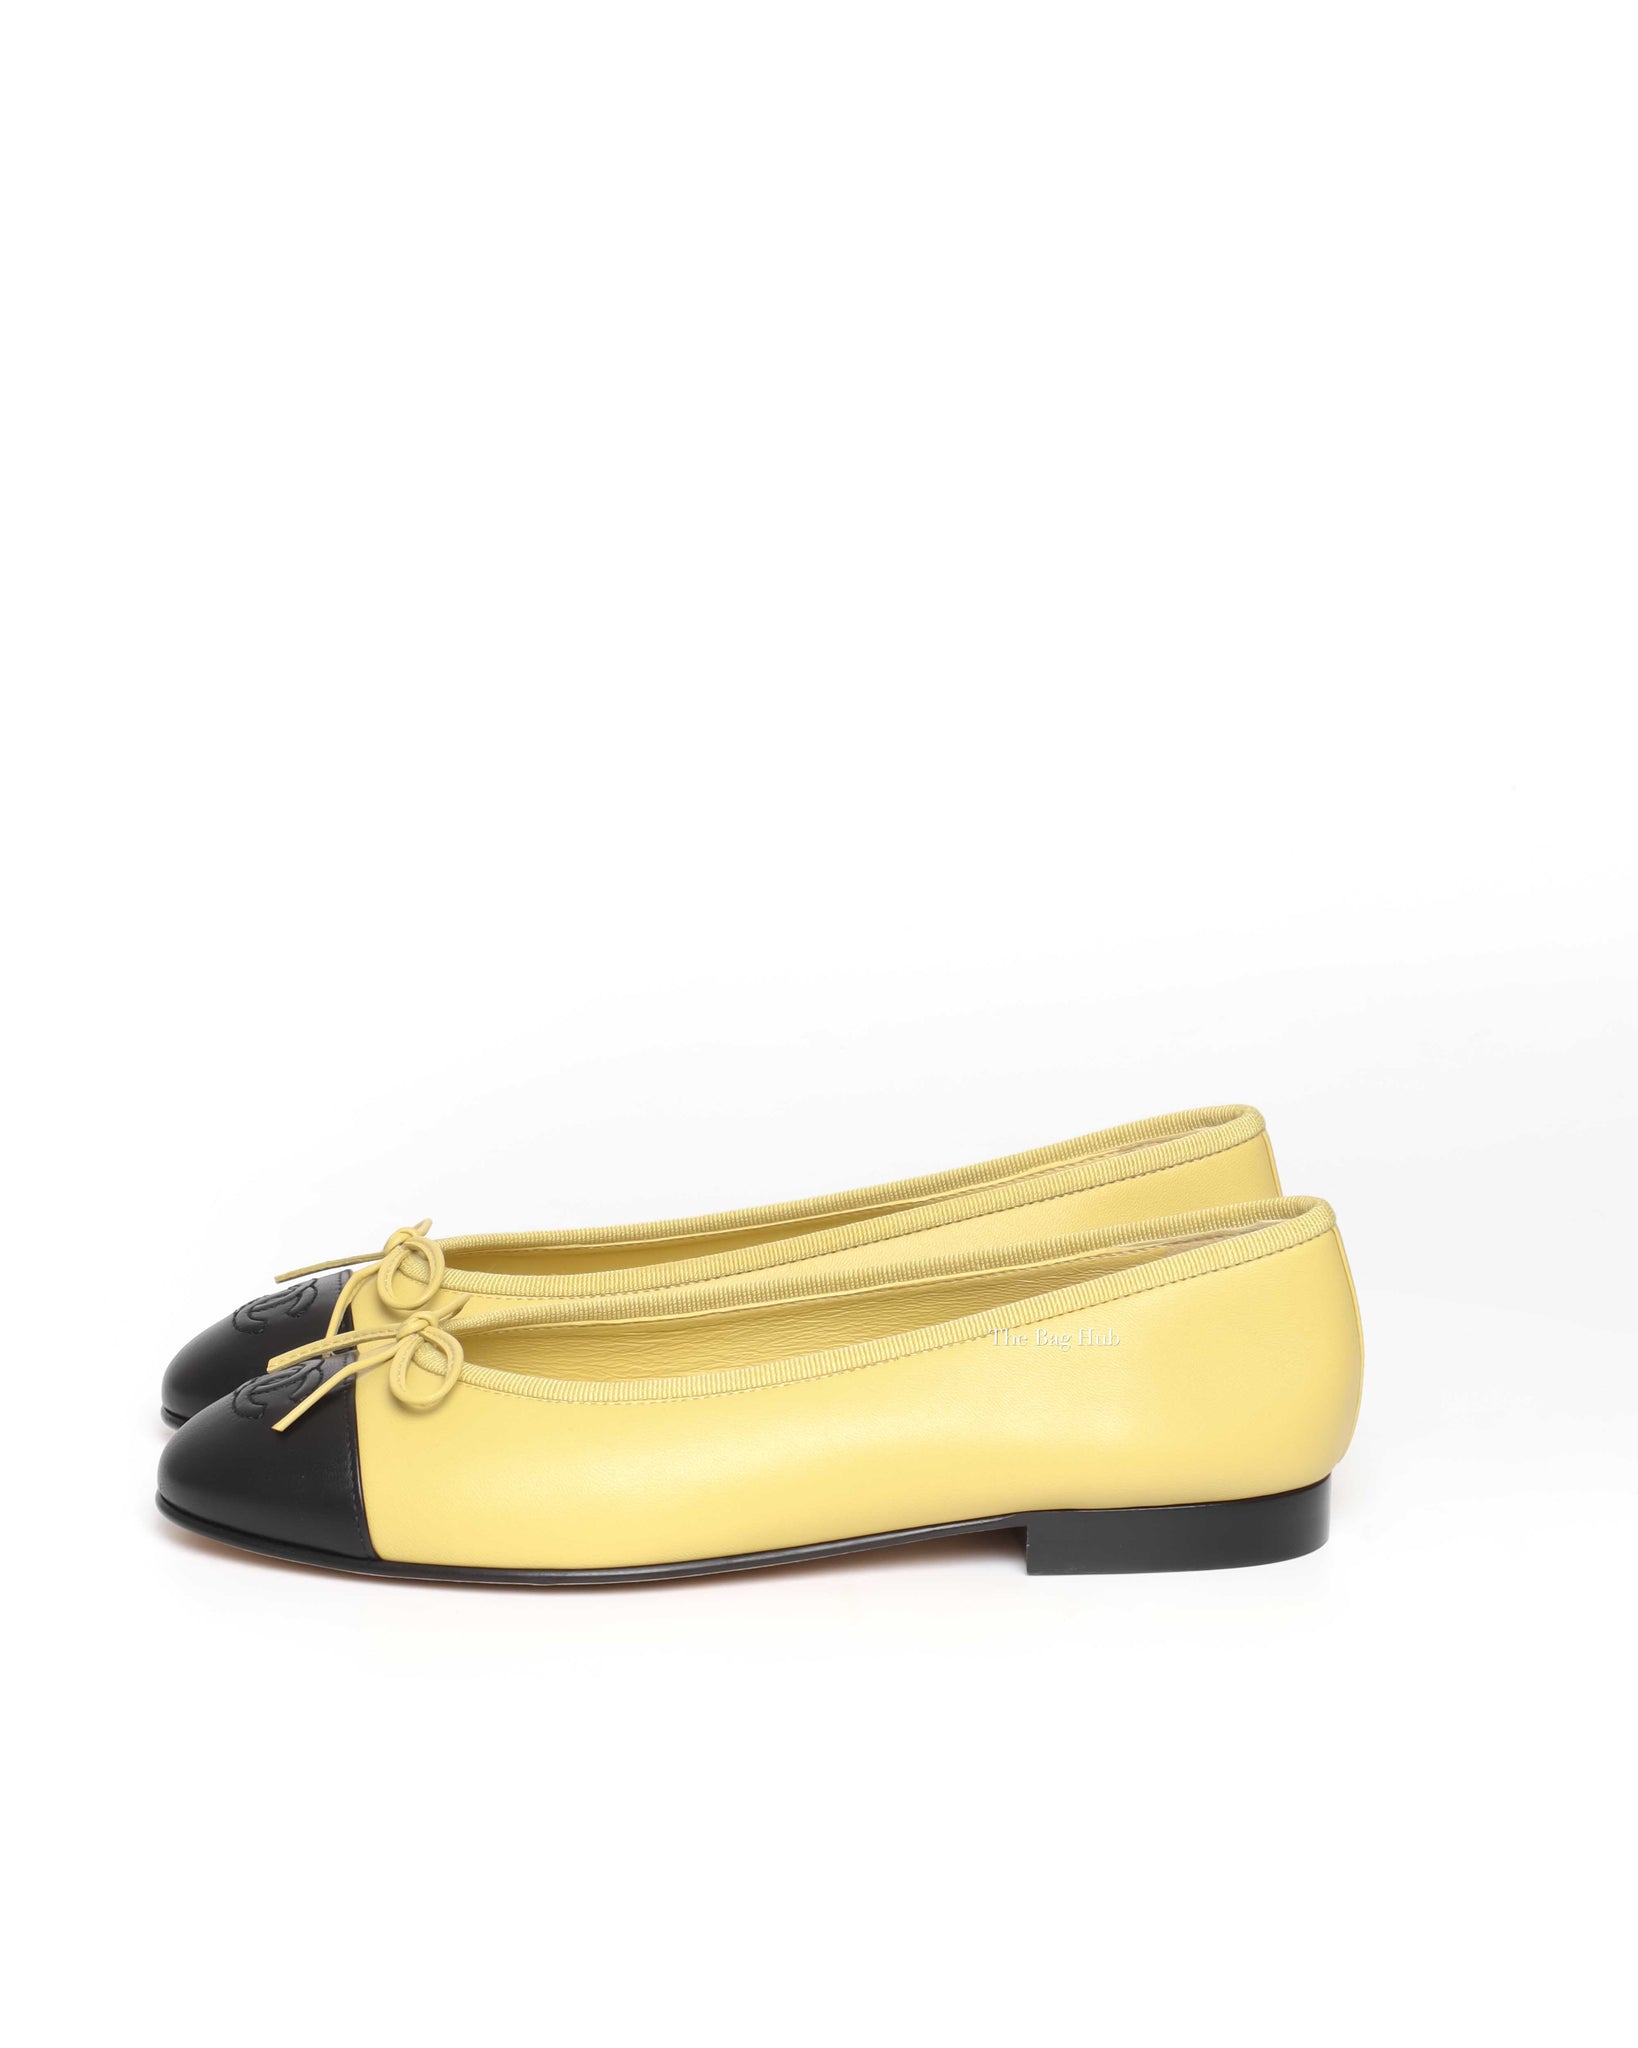 Chanel Yellow/Black Ballet Flats Size 37C-6